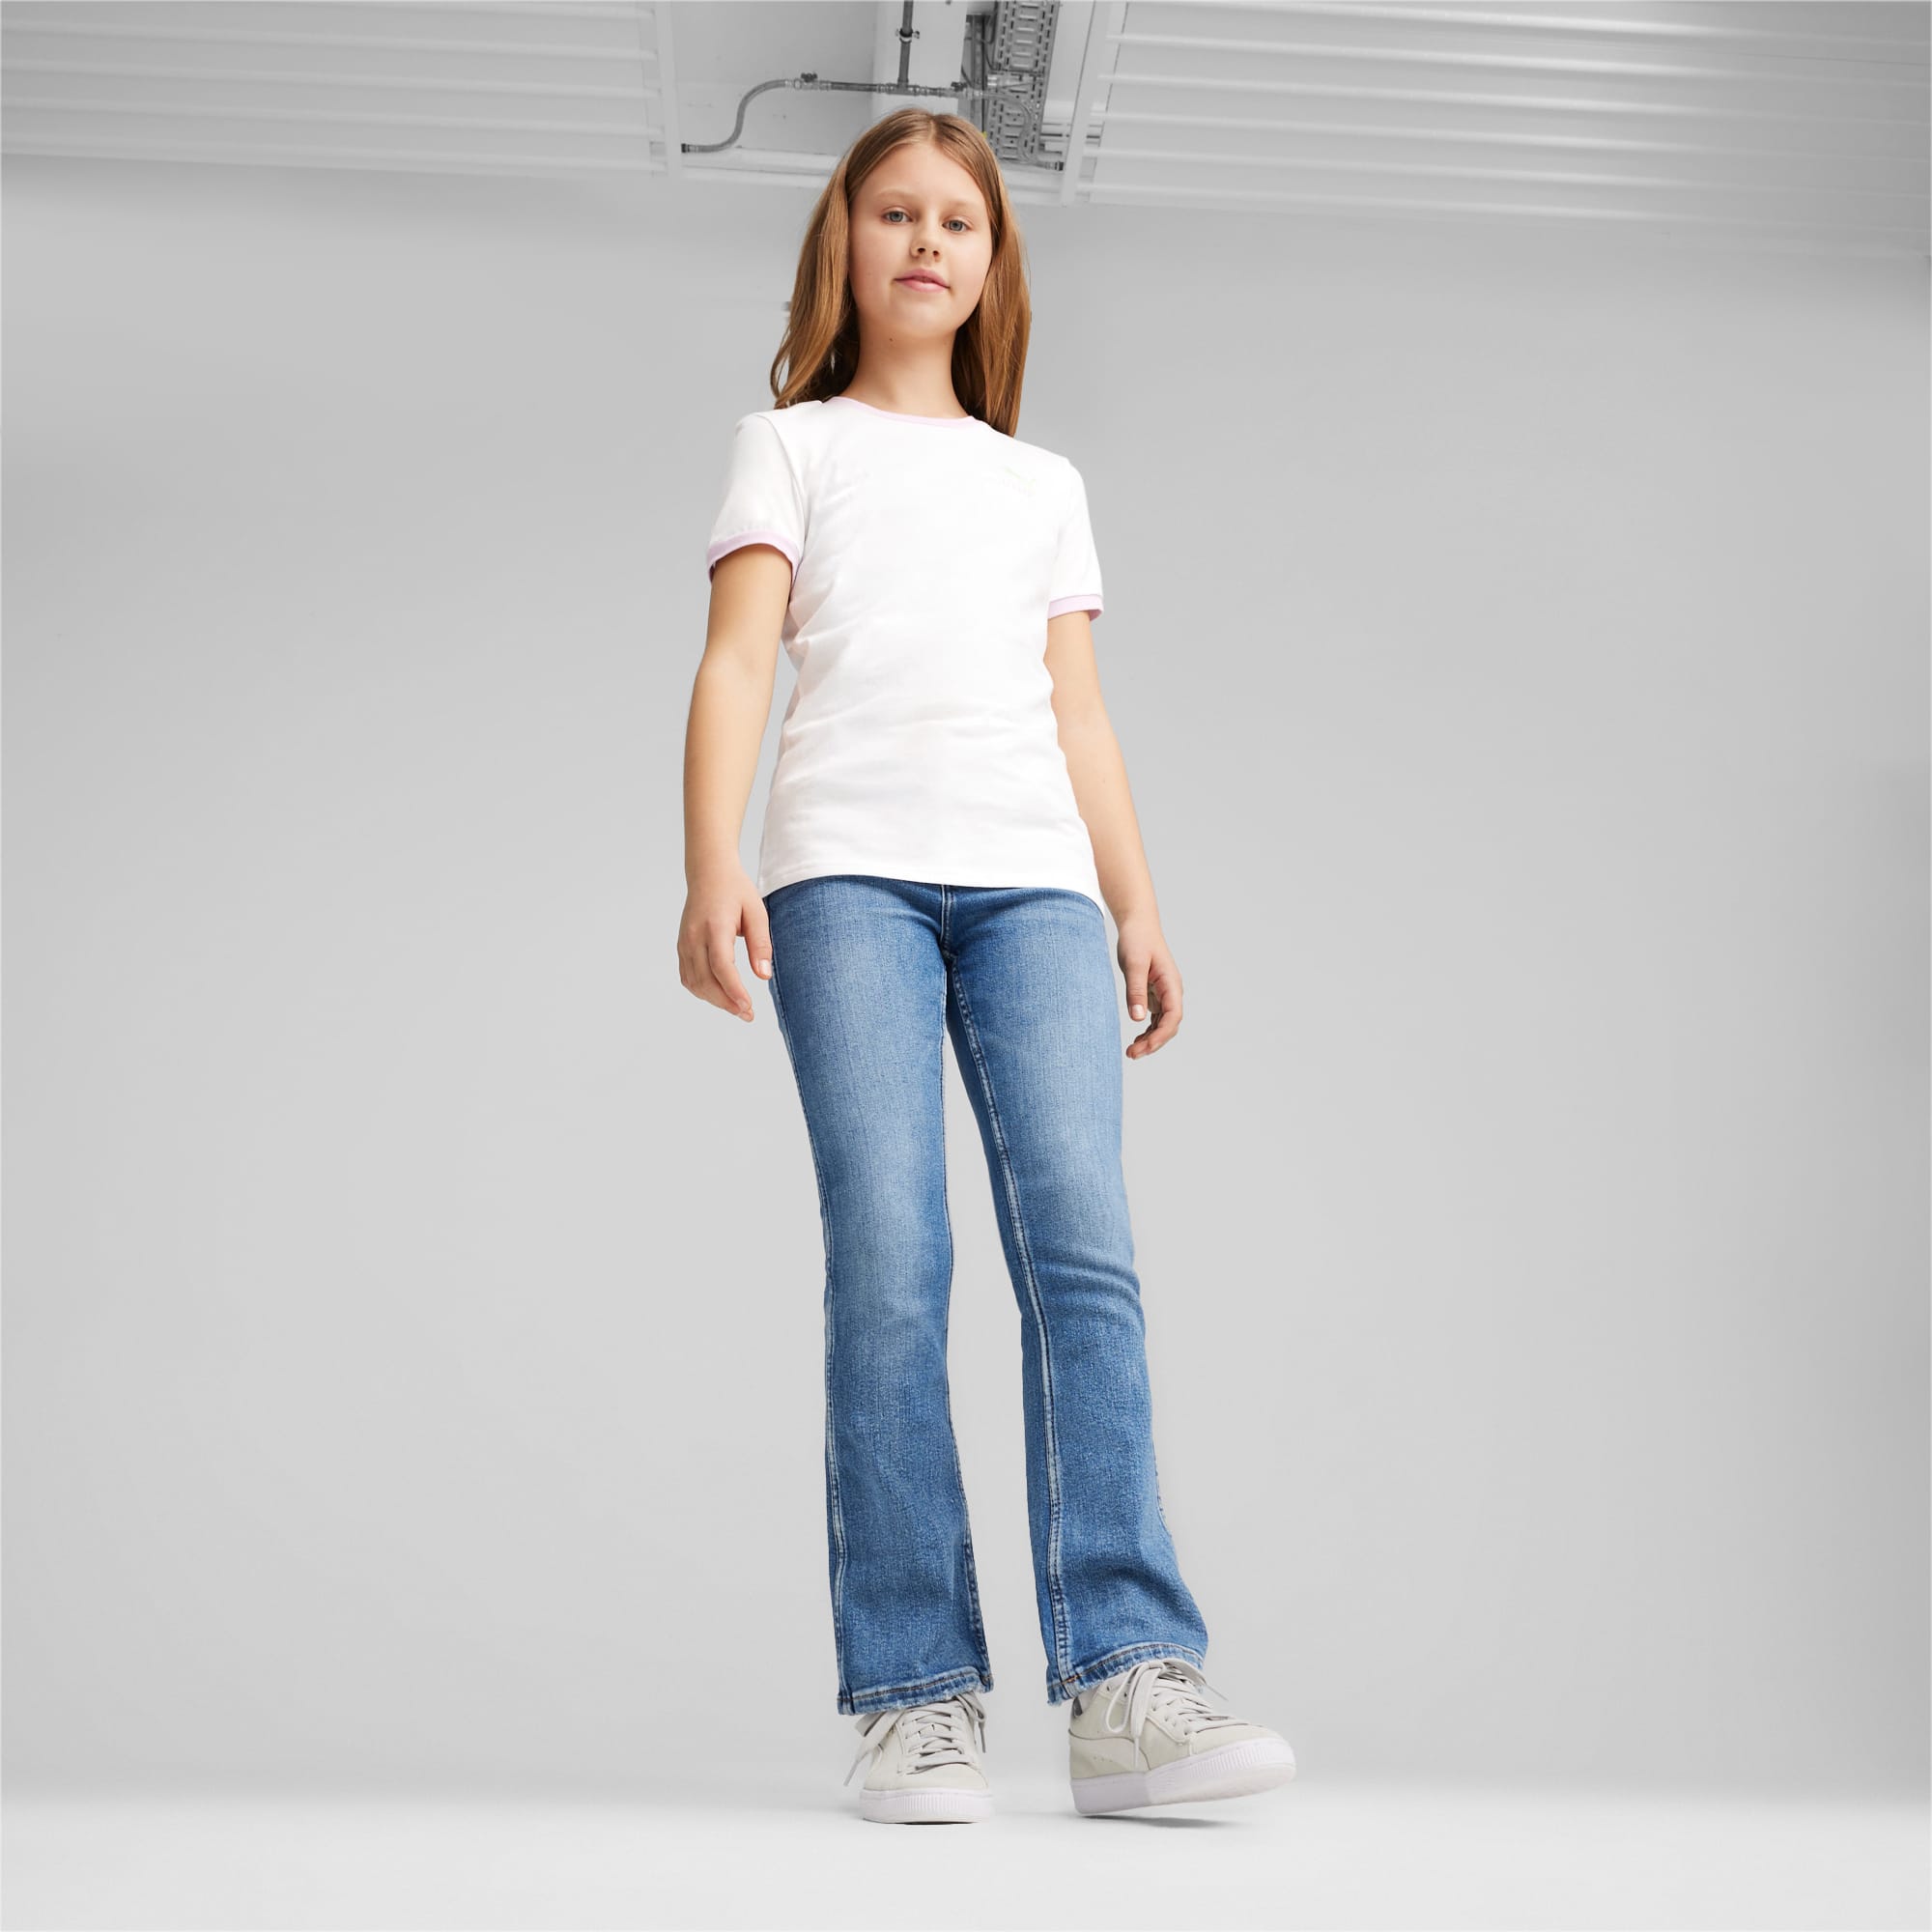 PUMA Classics Match Point Youth T-Shirt, White, Size 128, Clothing